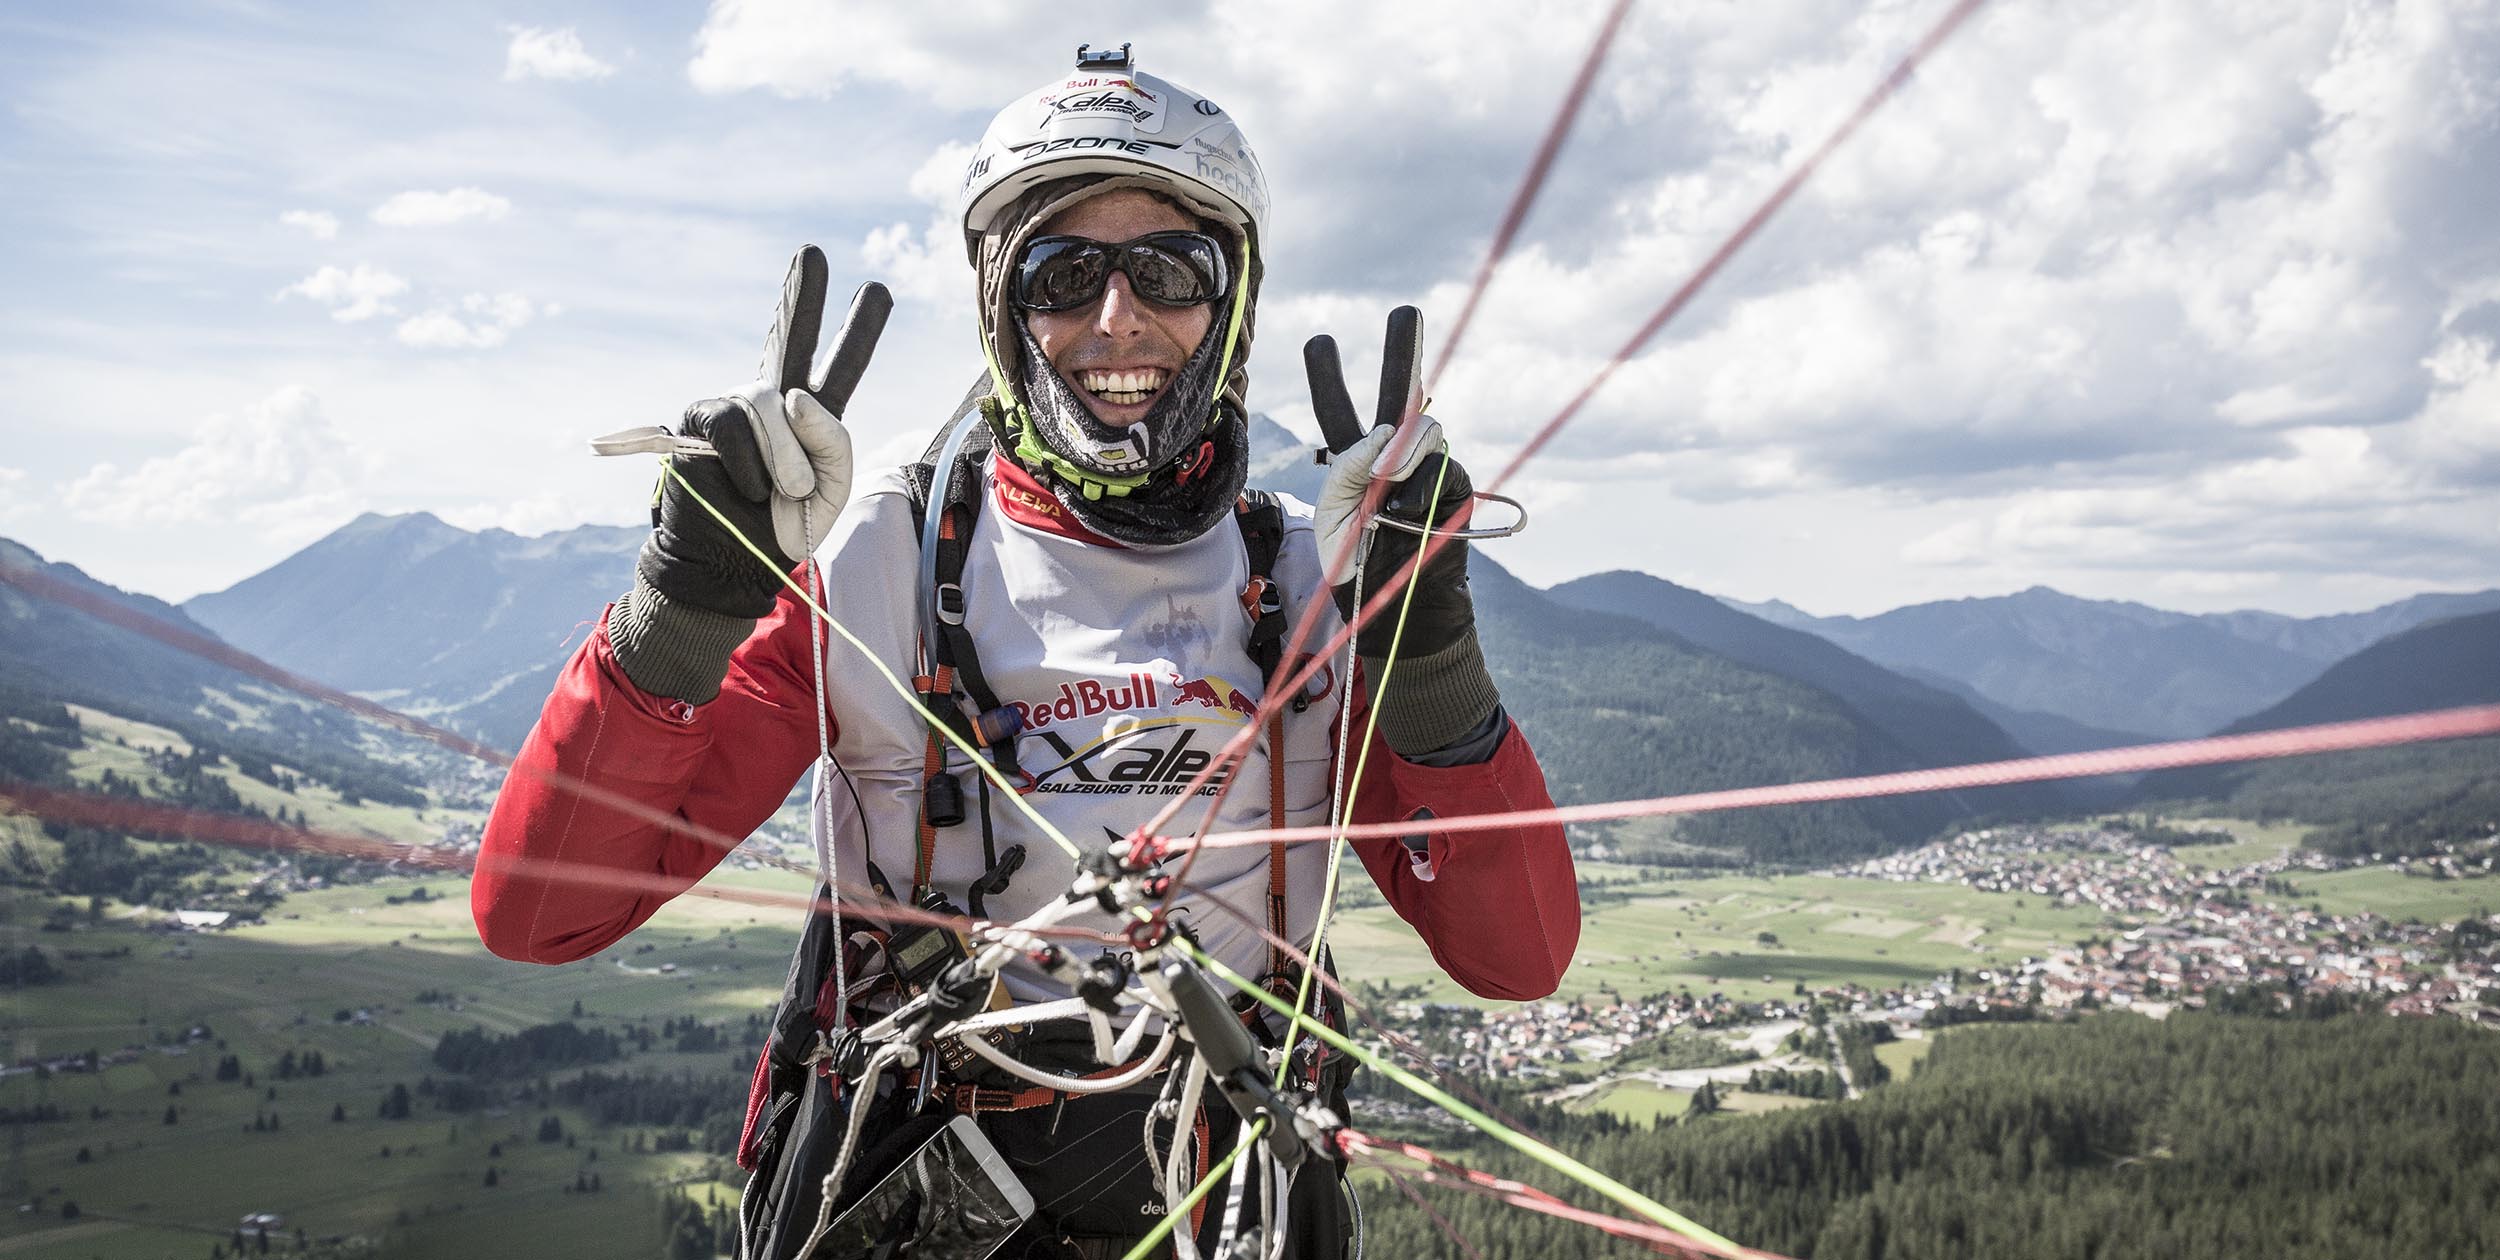 Pal Takats in the 2019 race. Photo: Harald Tauderer